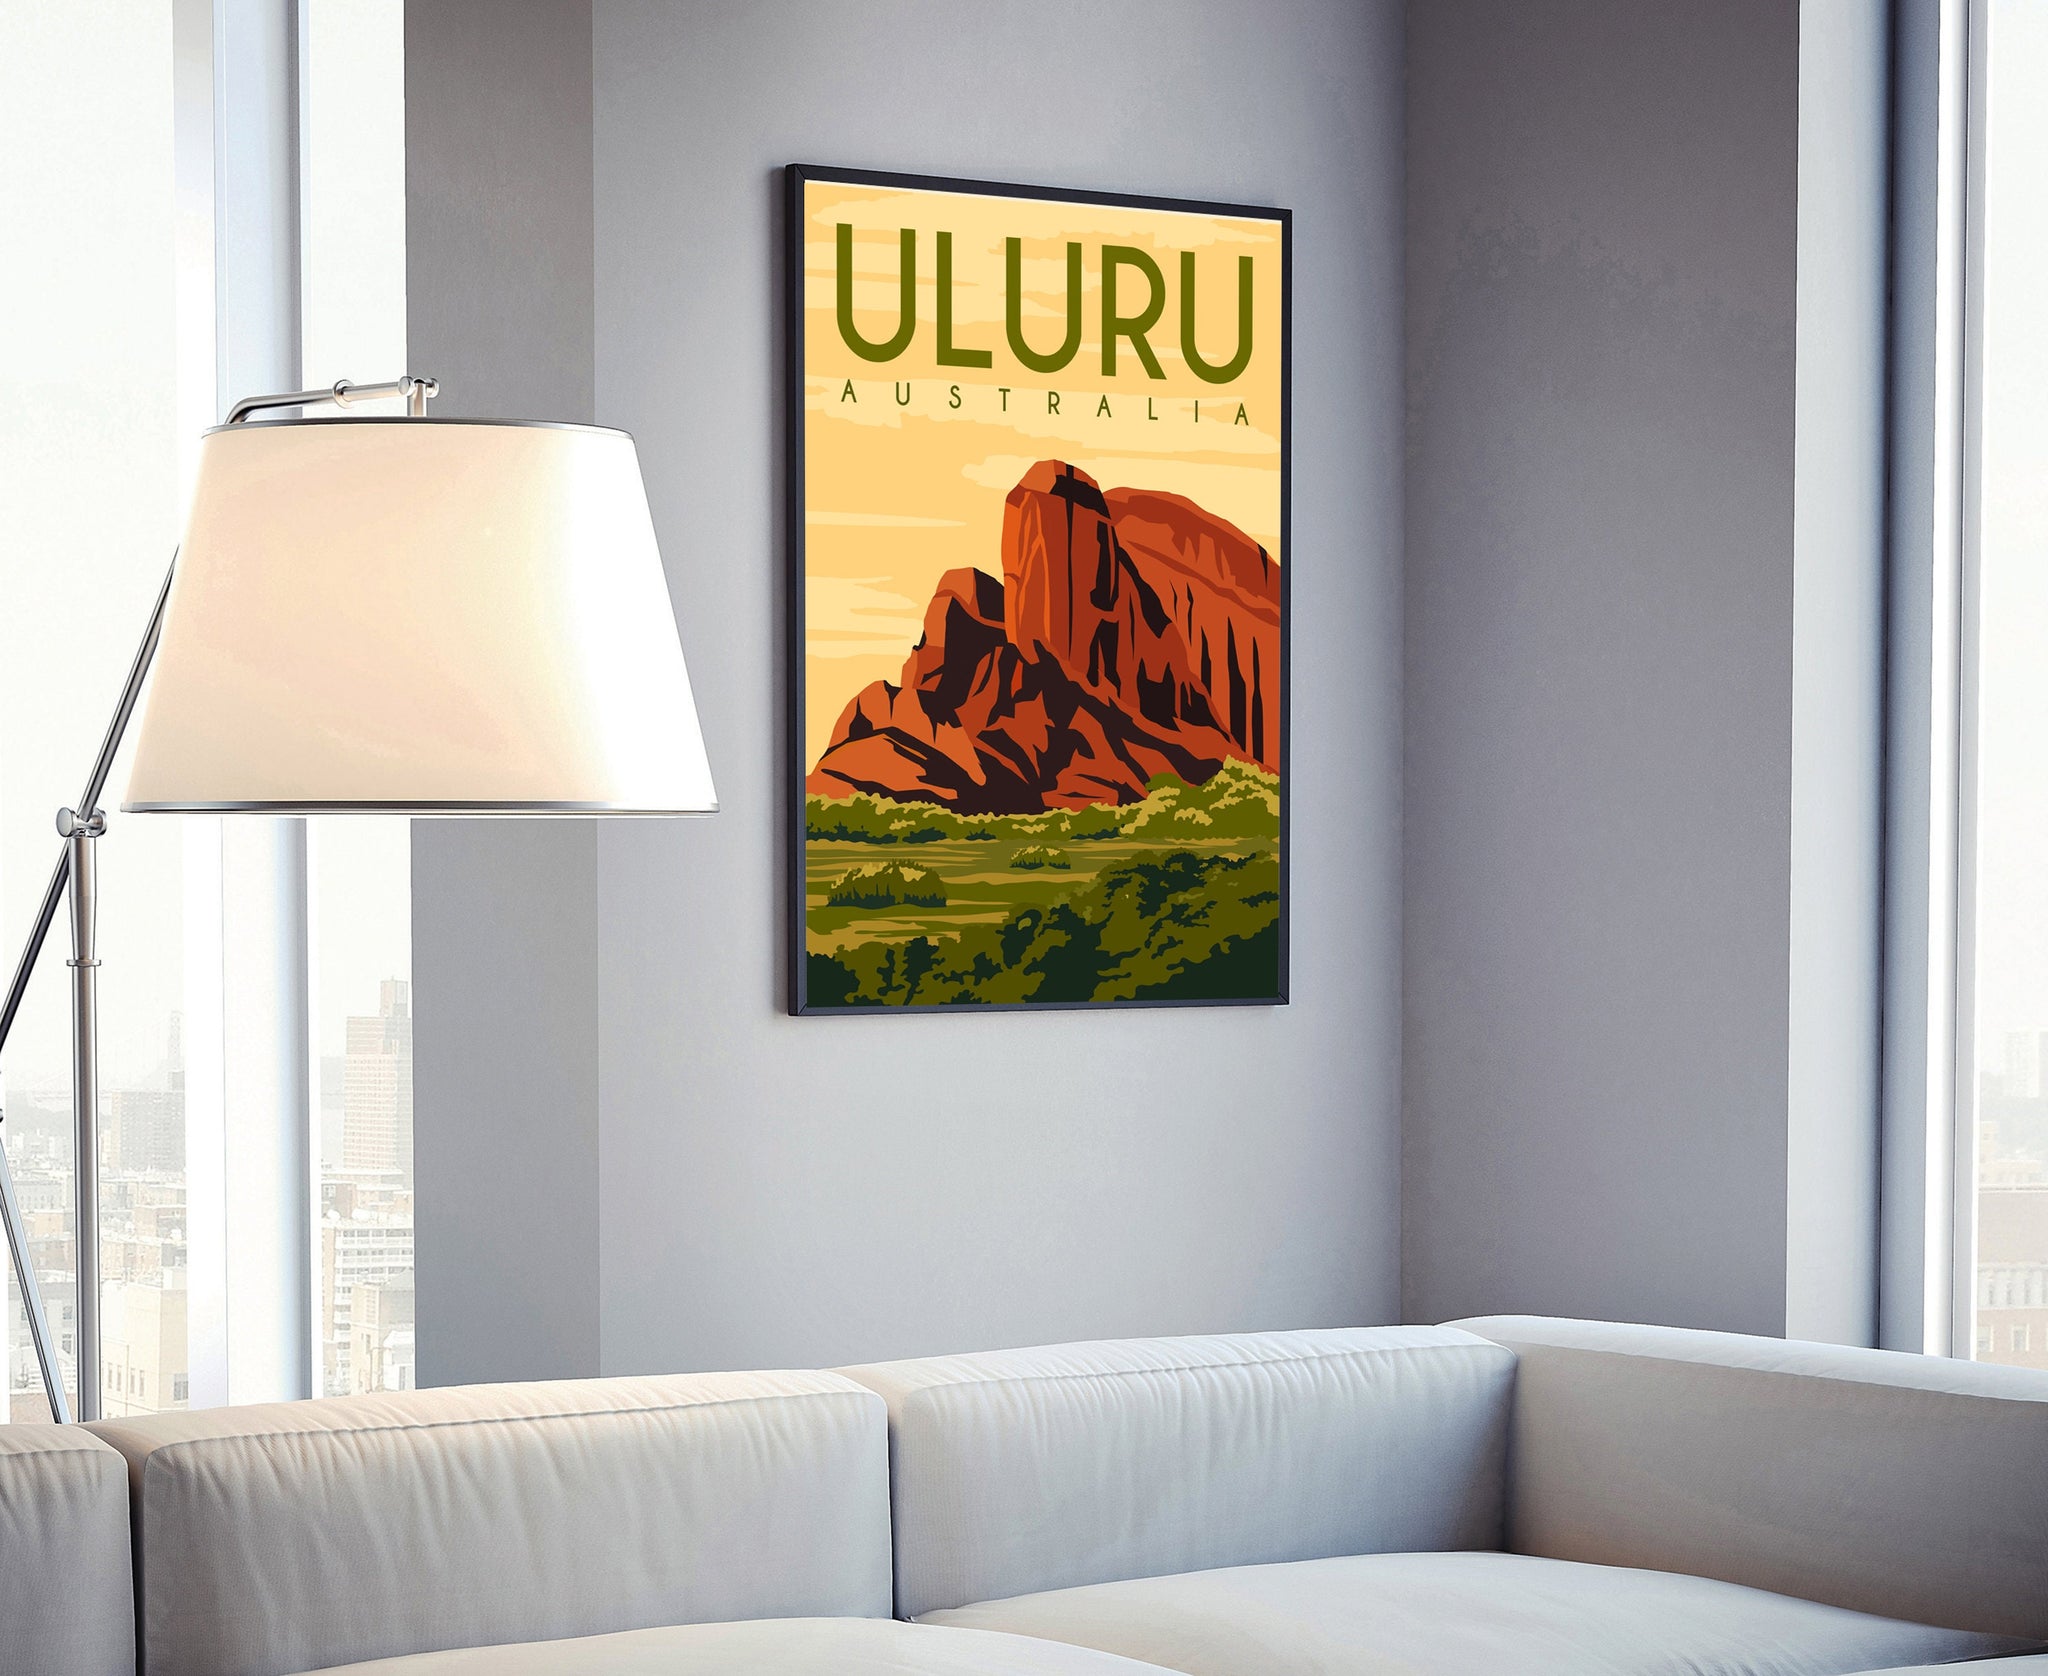 AUSTRALIA ULURU travel poster, Uluru Australia cityscape poster, Uluru landmark poster wall art, Home wall art, Office wall decoration